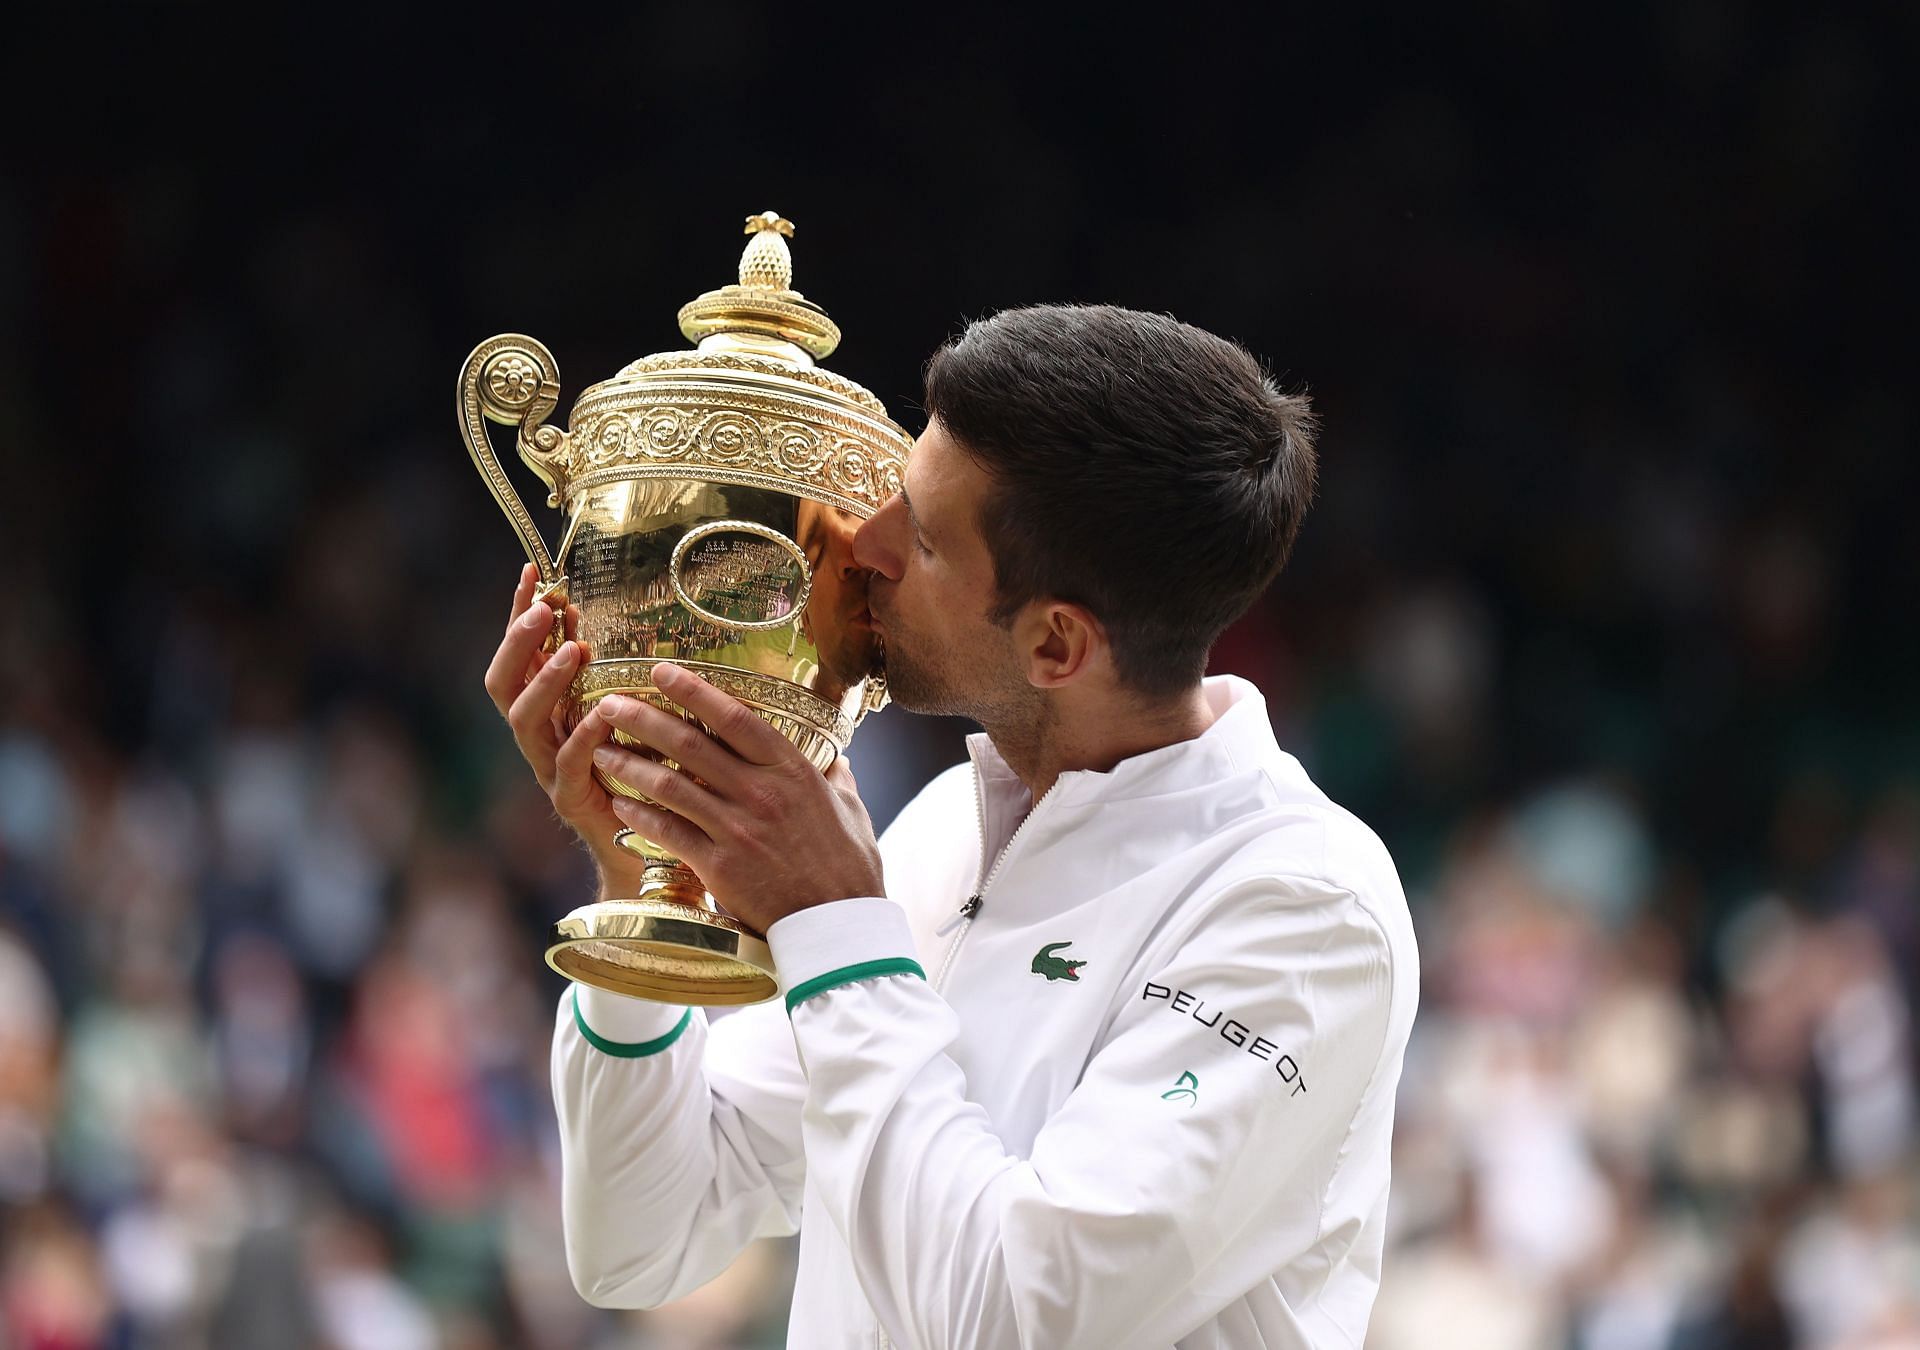 Djokovic kisses the trophy after winning Wimbledon last year